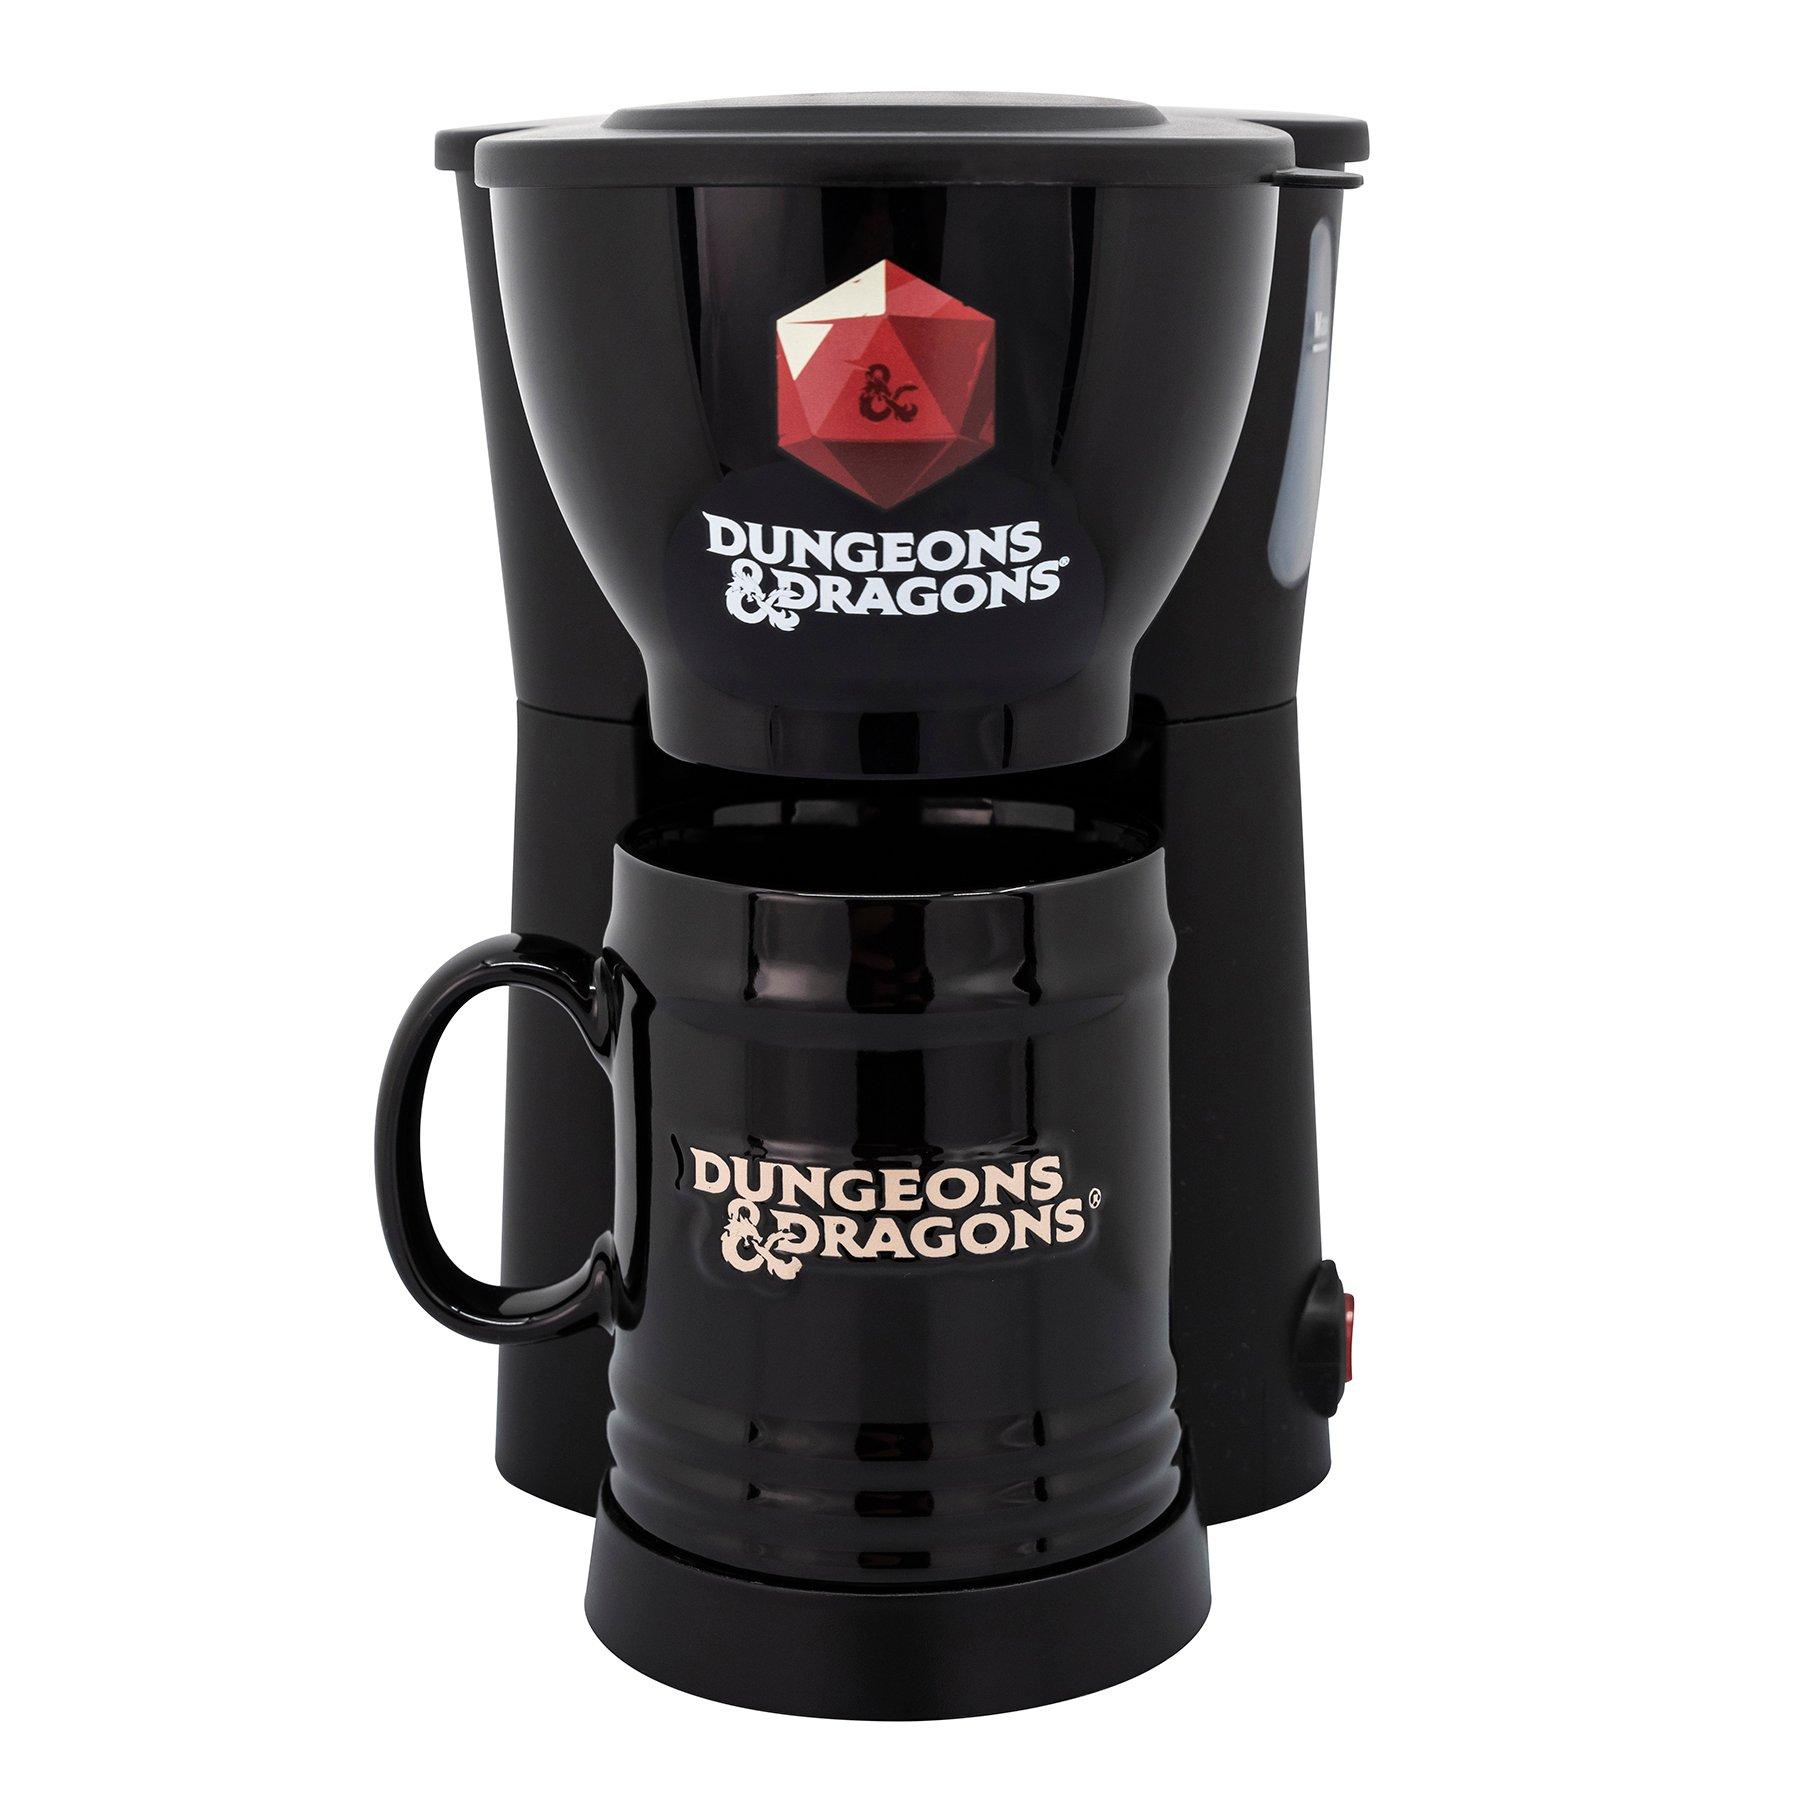 https://media.gamestop.com/i/gamestop/11168014_ALT04/Dungeons-and-Dragons-Coffee-Maker-With-Mug?$pdp$